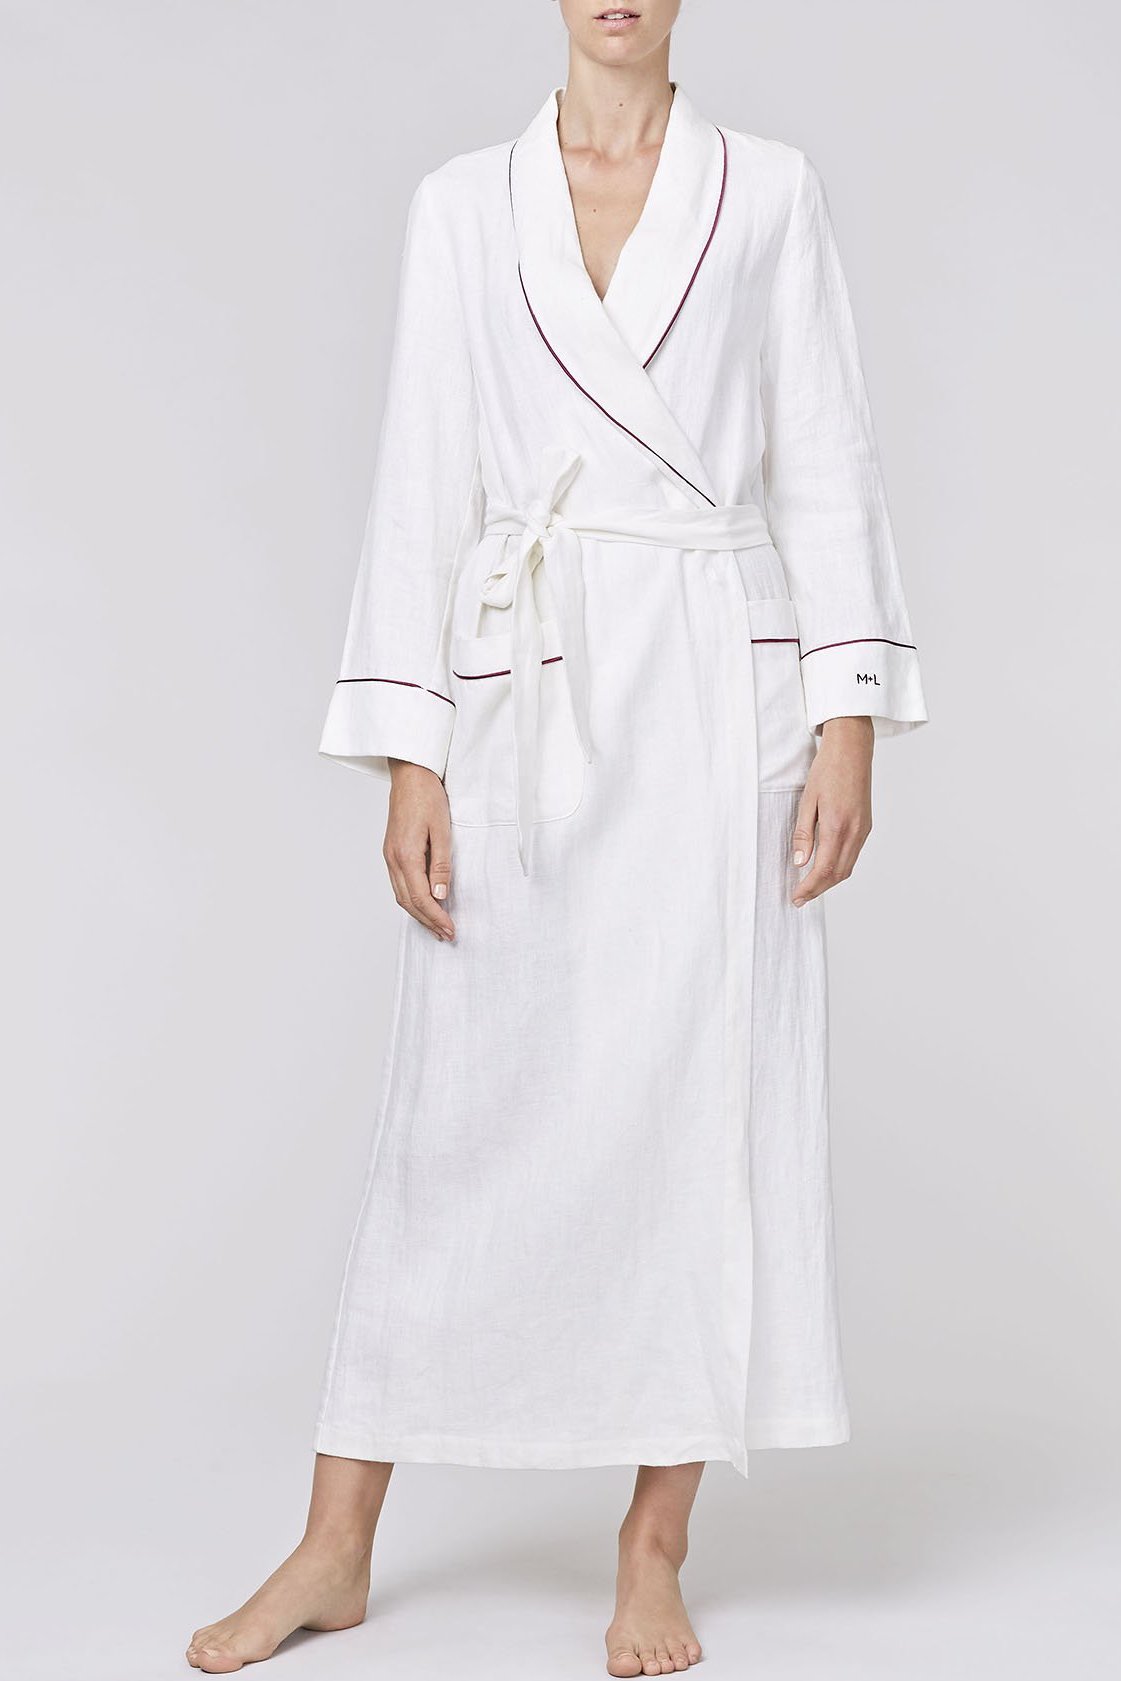 long-length linen white robe trimmed with black satin